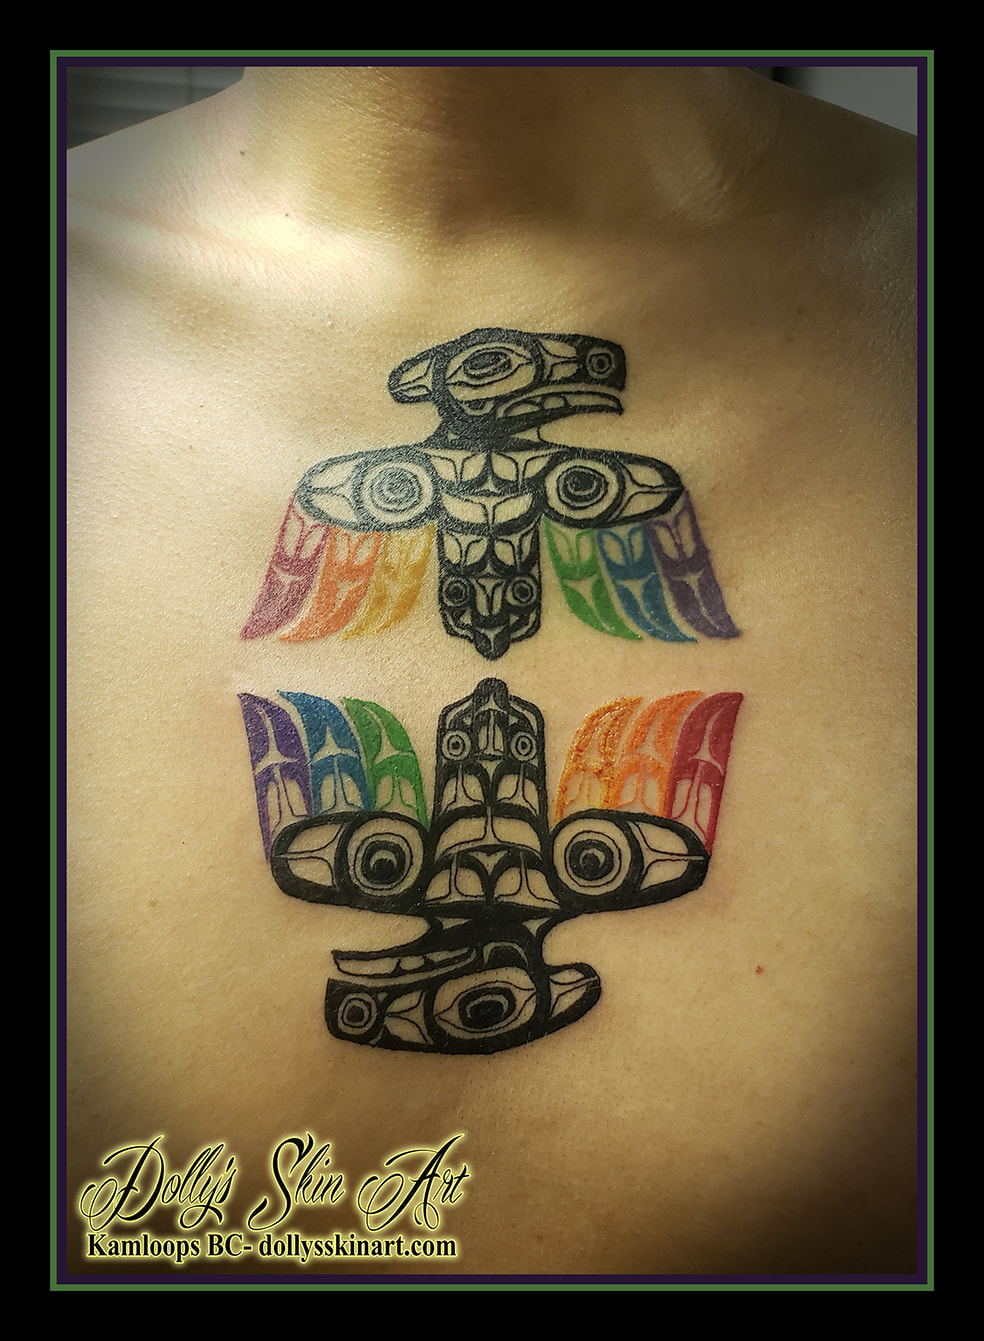 rainbow eagle tattoo indigenous art two-spirit pride red orange yellow green blue purple black chest tattoo dolly's skin art kamloops